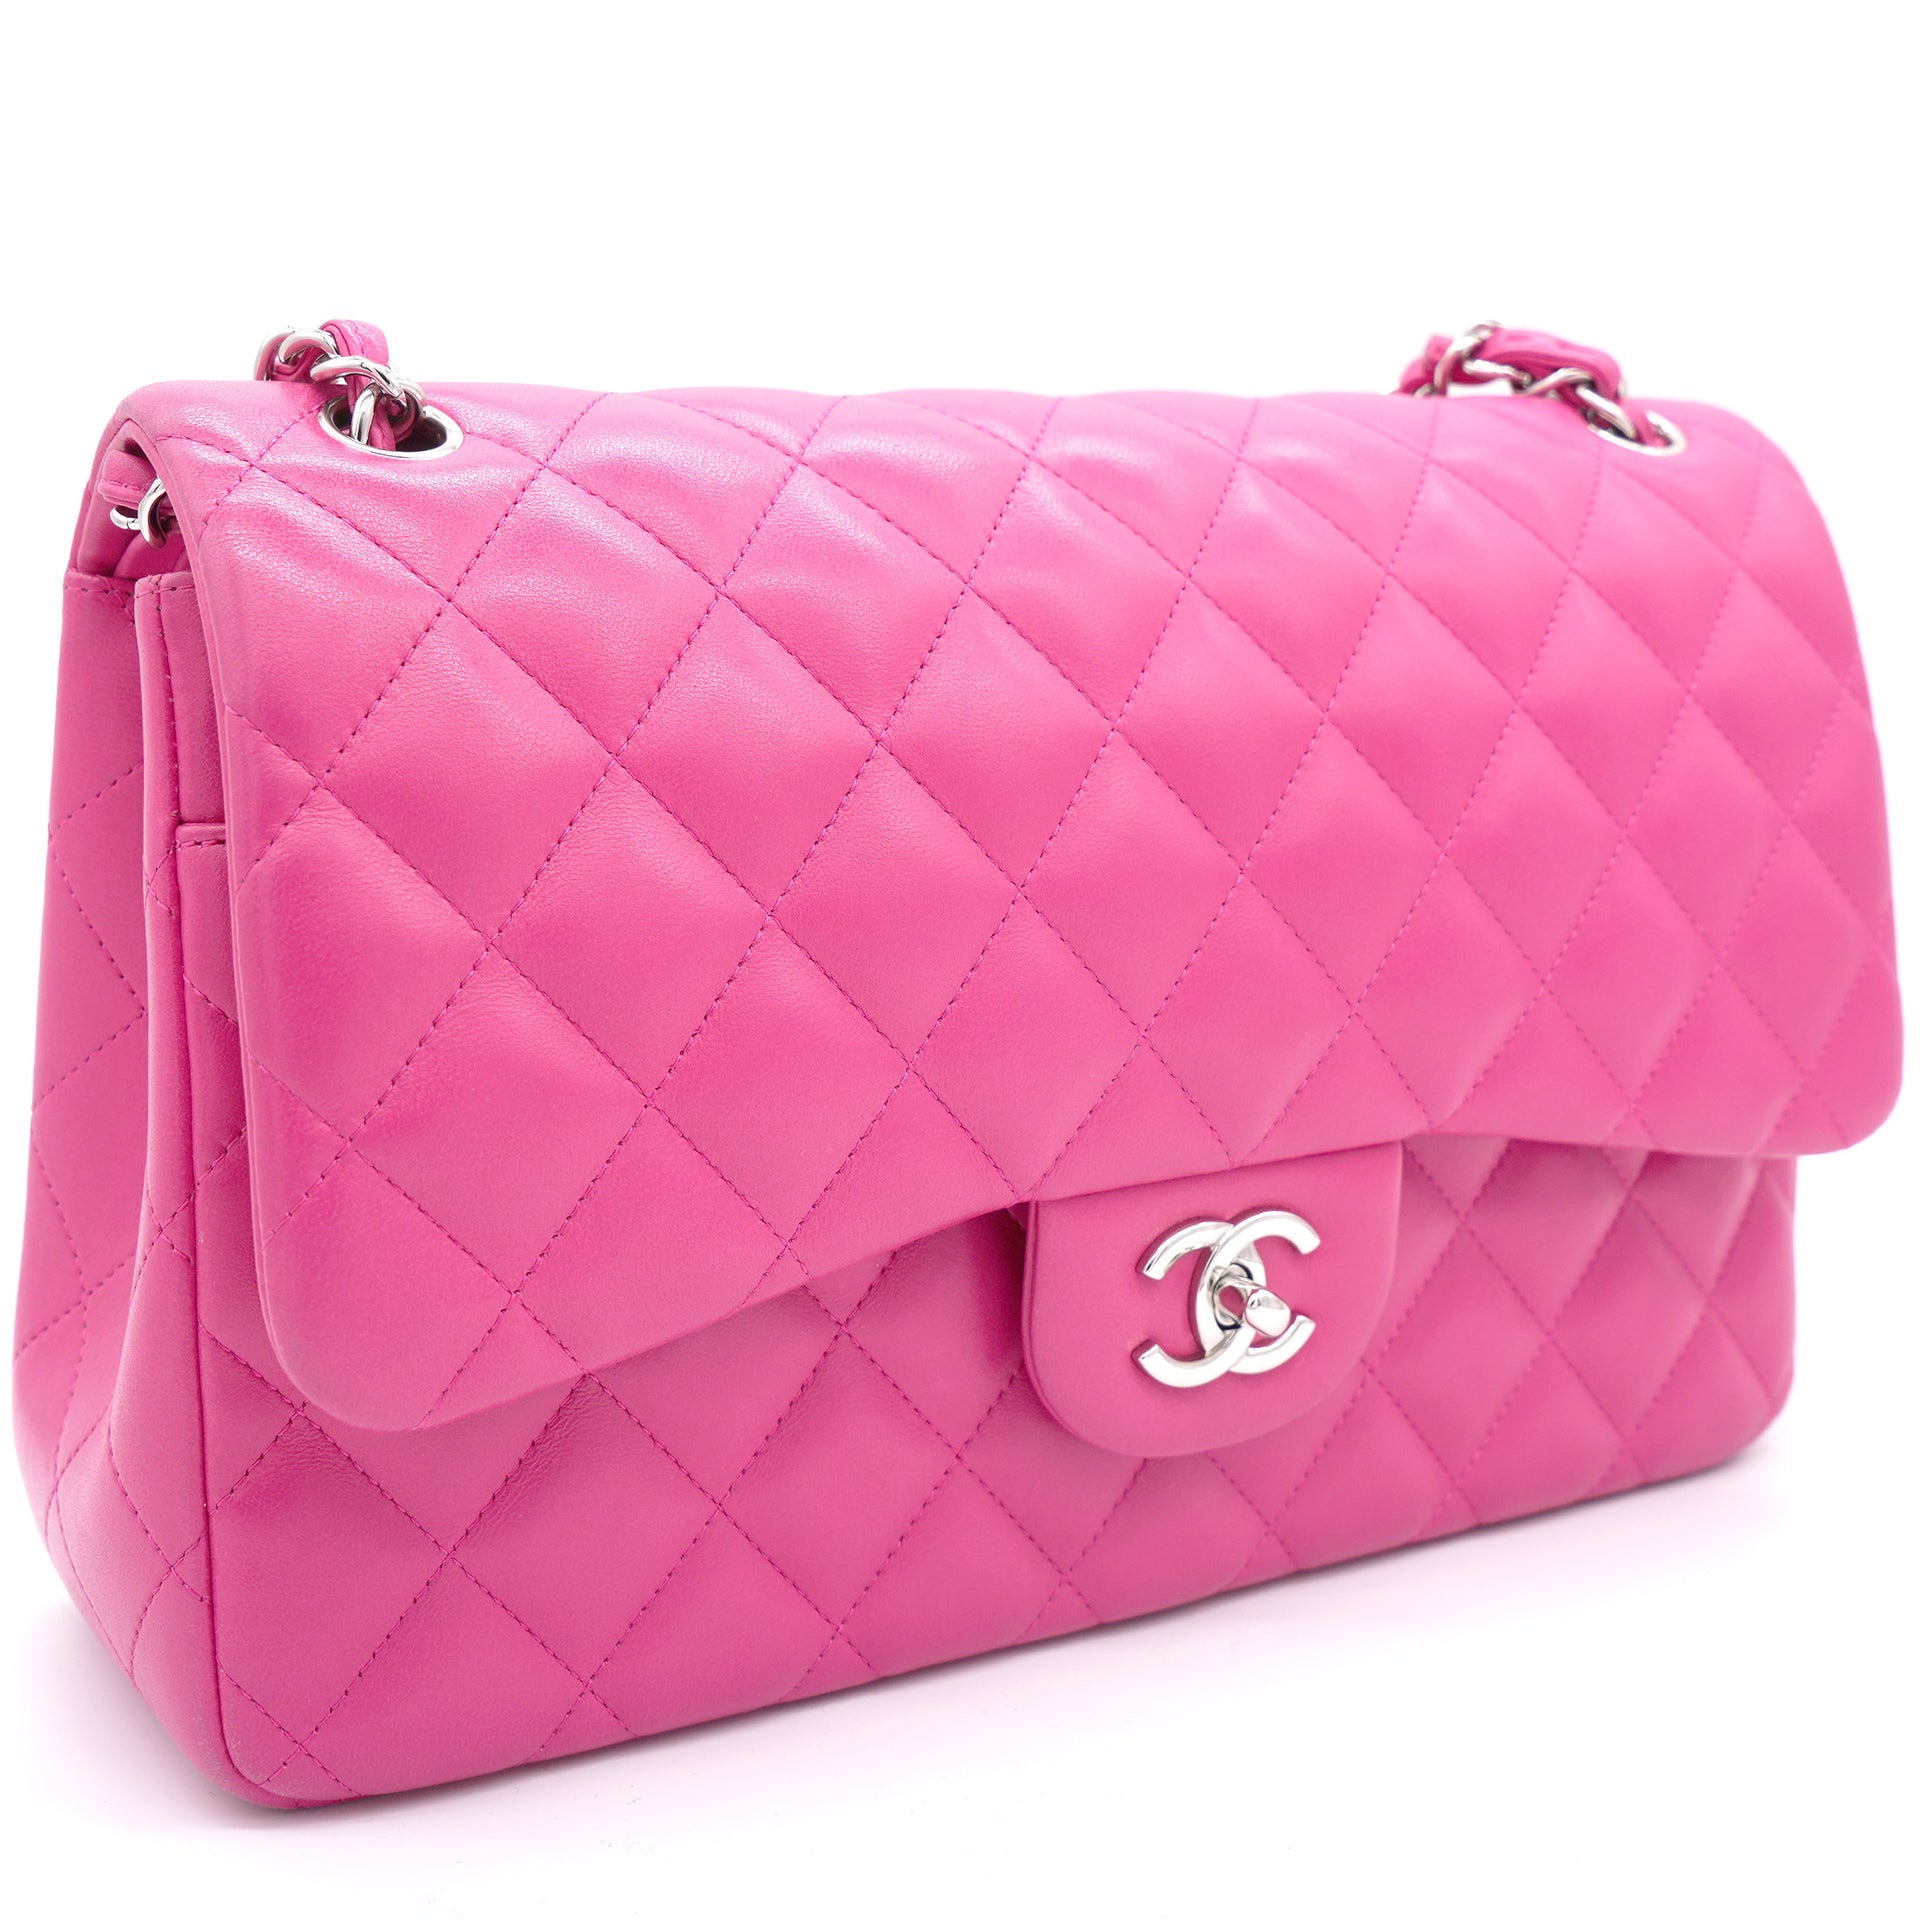 Hot Pink Chanel Classic Jumbo Flap